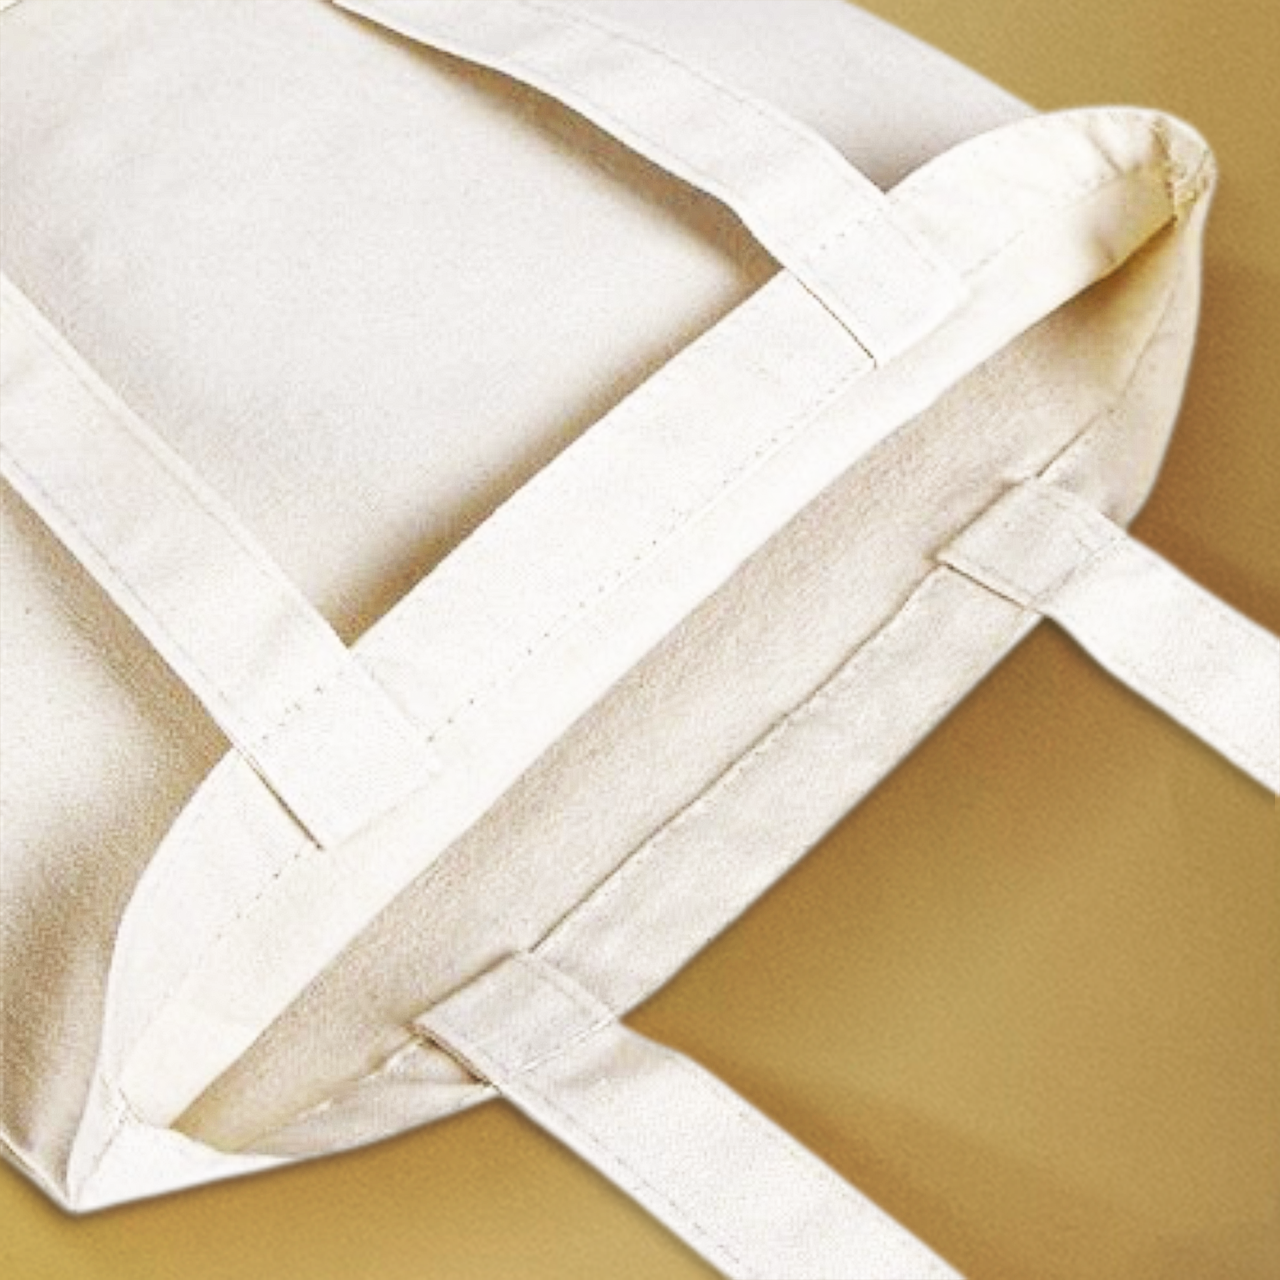 Natural Cotton Bag (10oz)